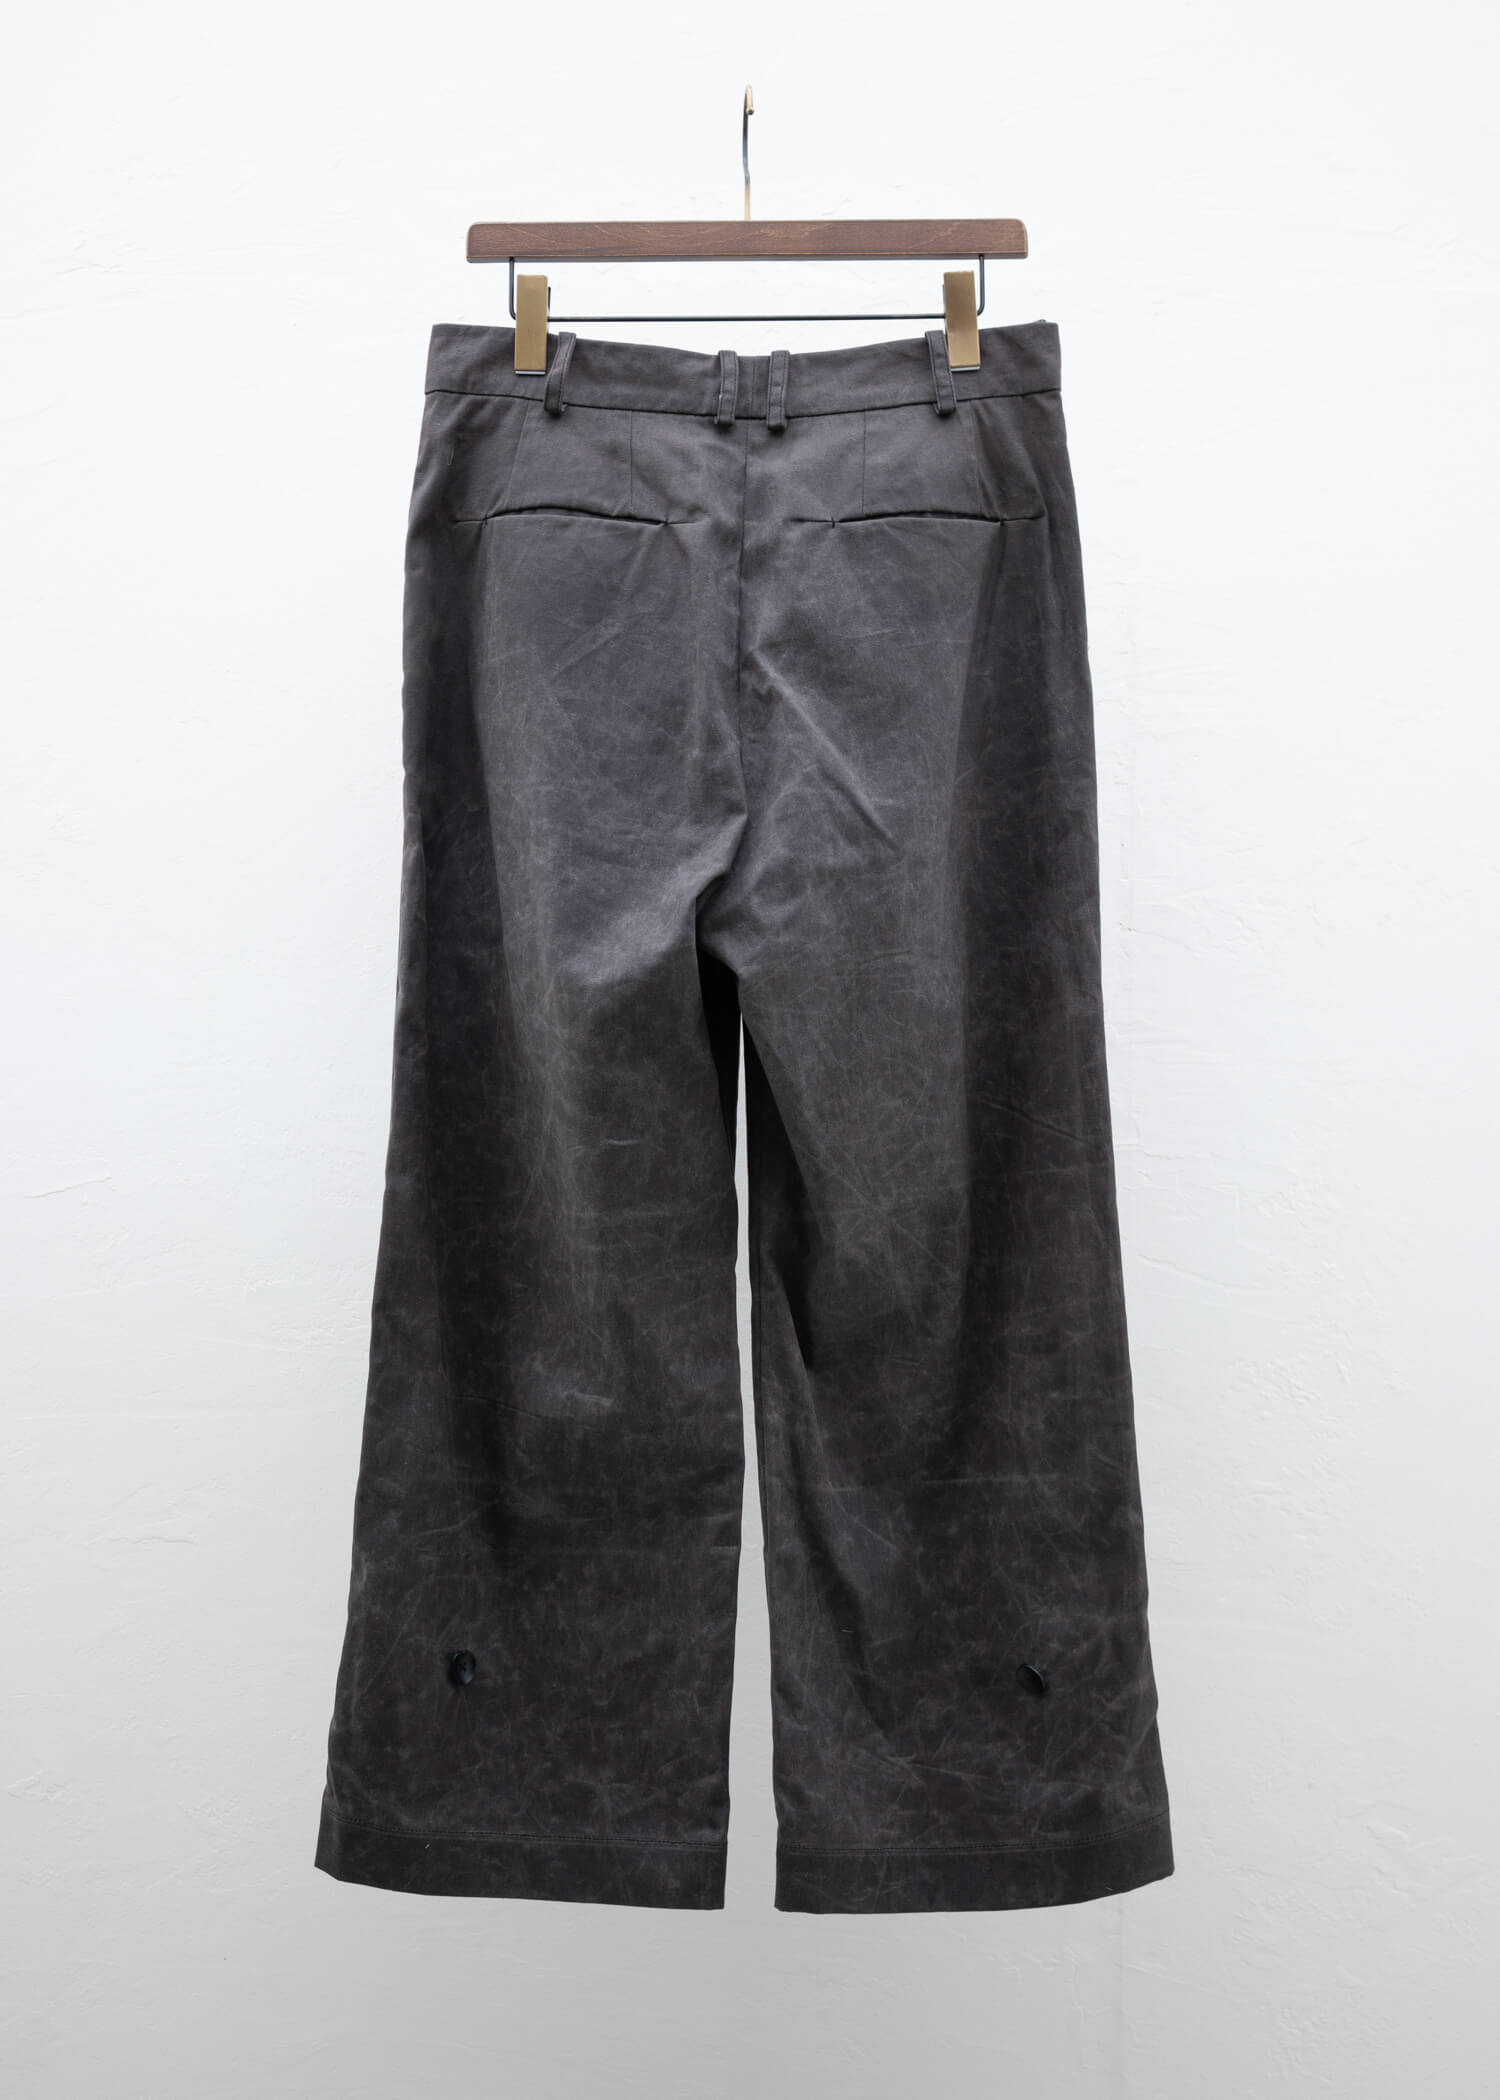 PENG TAI Cotton Flared Jeans - Peng Tai Official Site